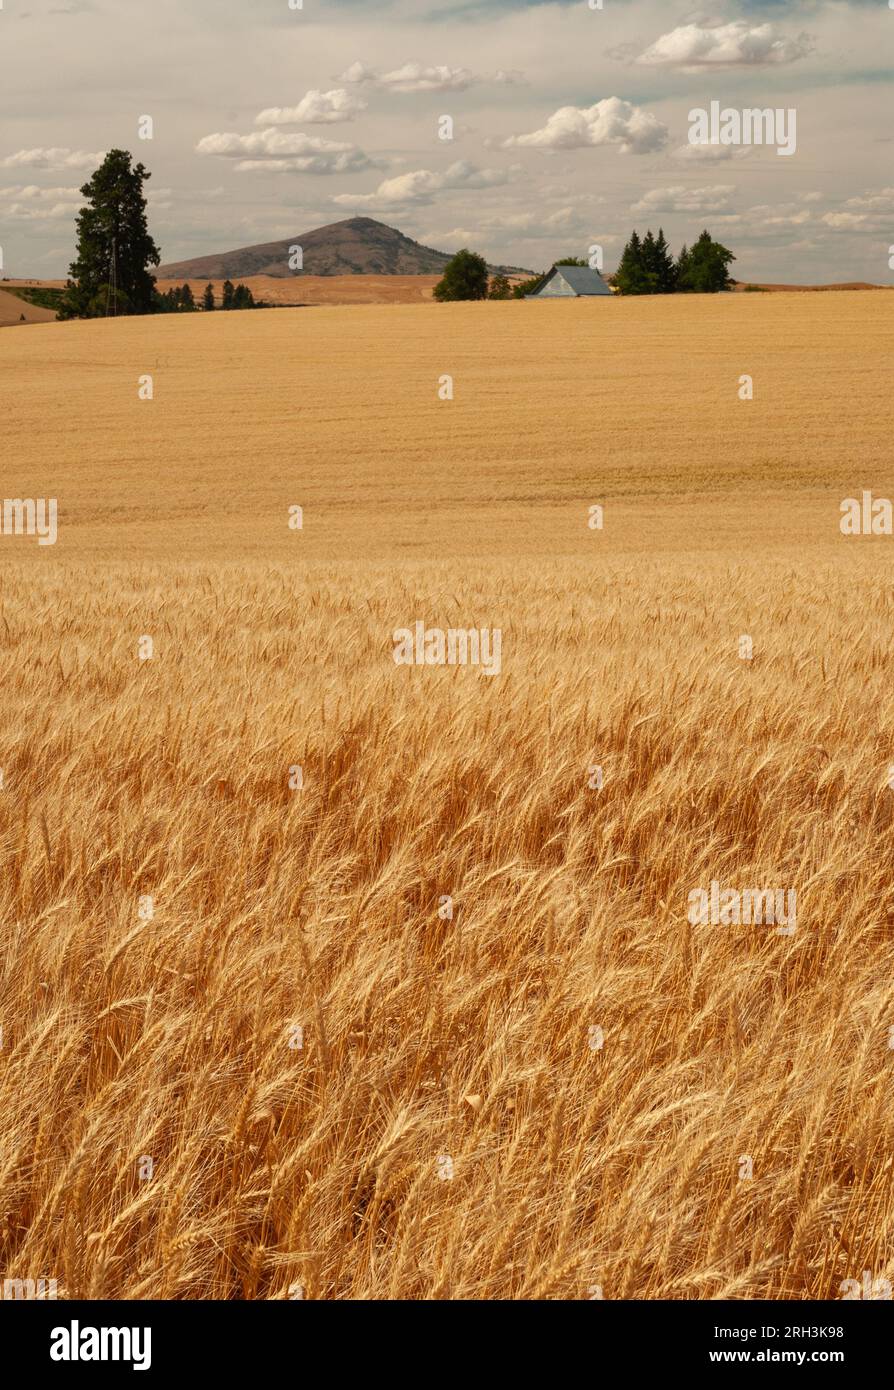 Wheat fields, hills and distant mountains, Whitman County, Washington, USA Stock Photo